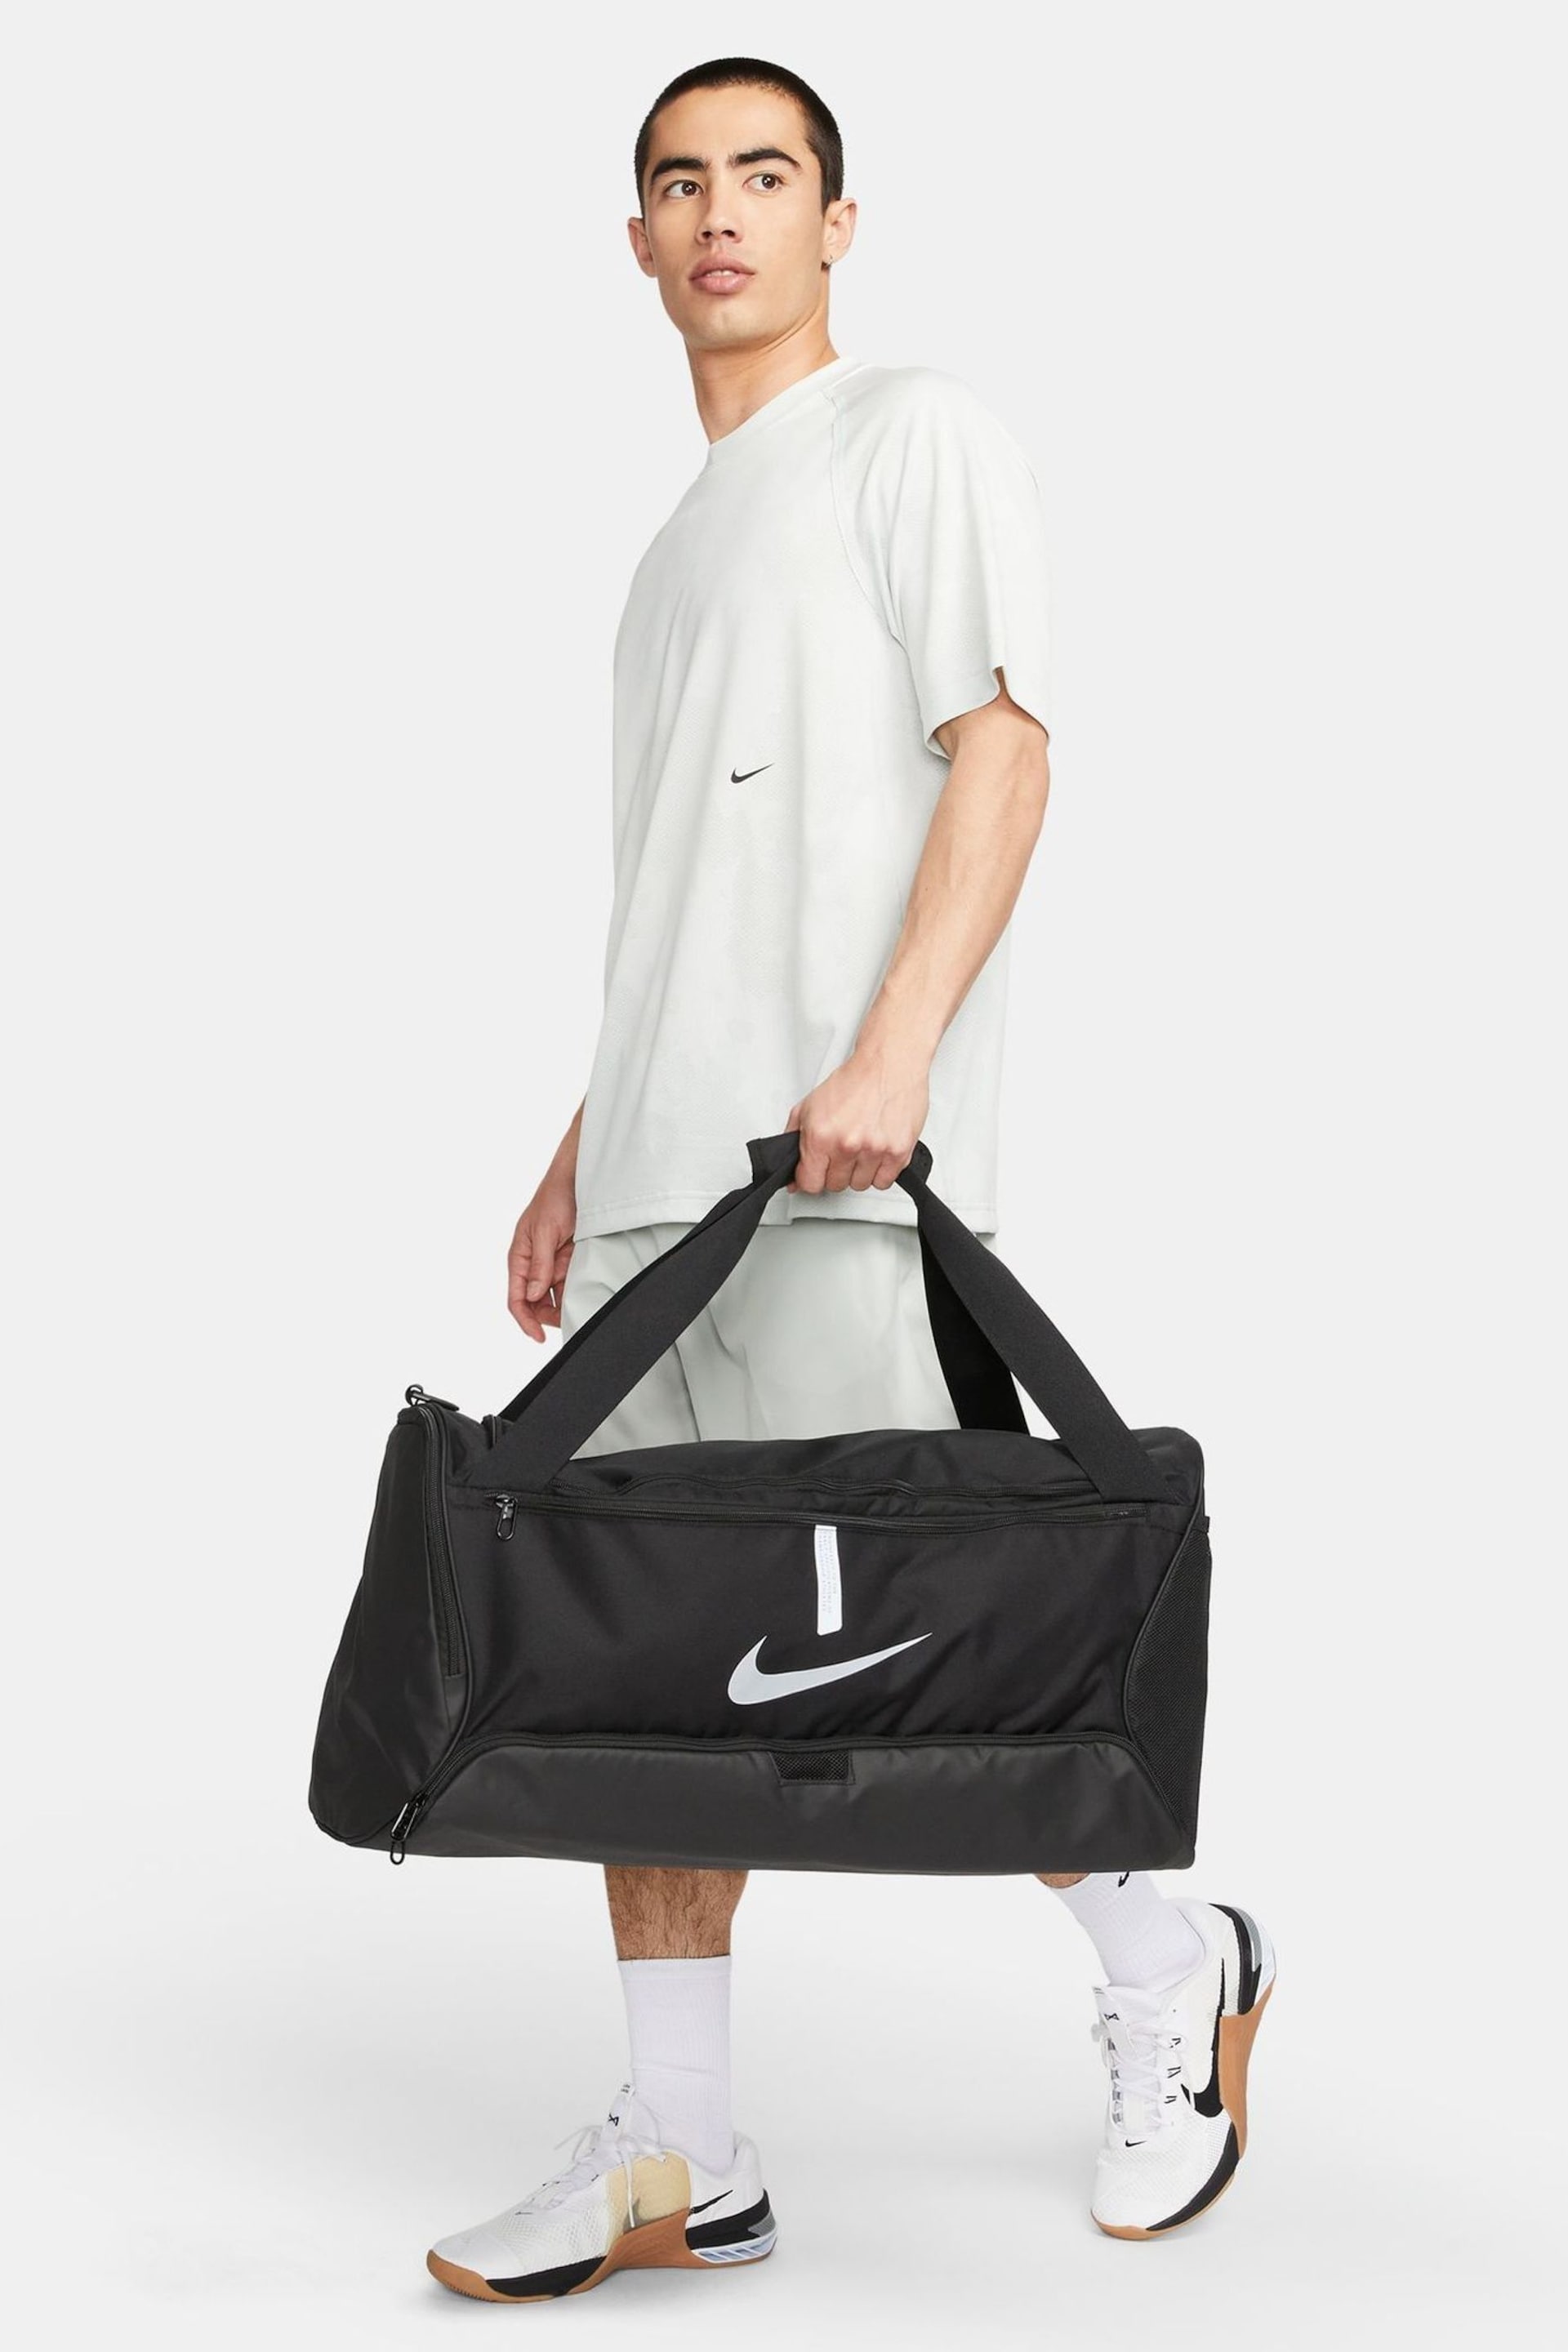 Nike Black Medium Academy Team Football Duffel Bag 60L - Image 2 of 10